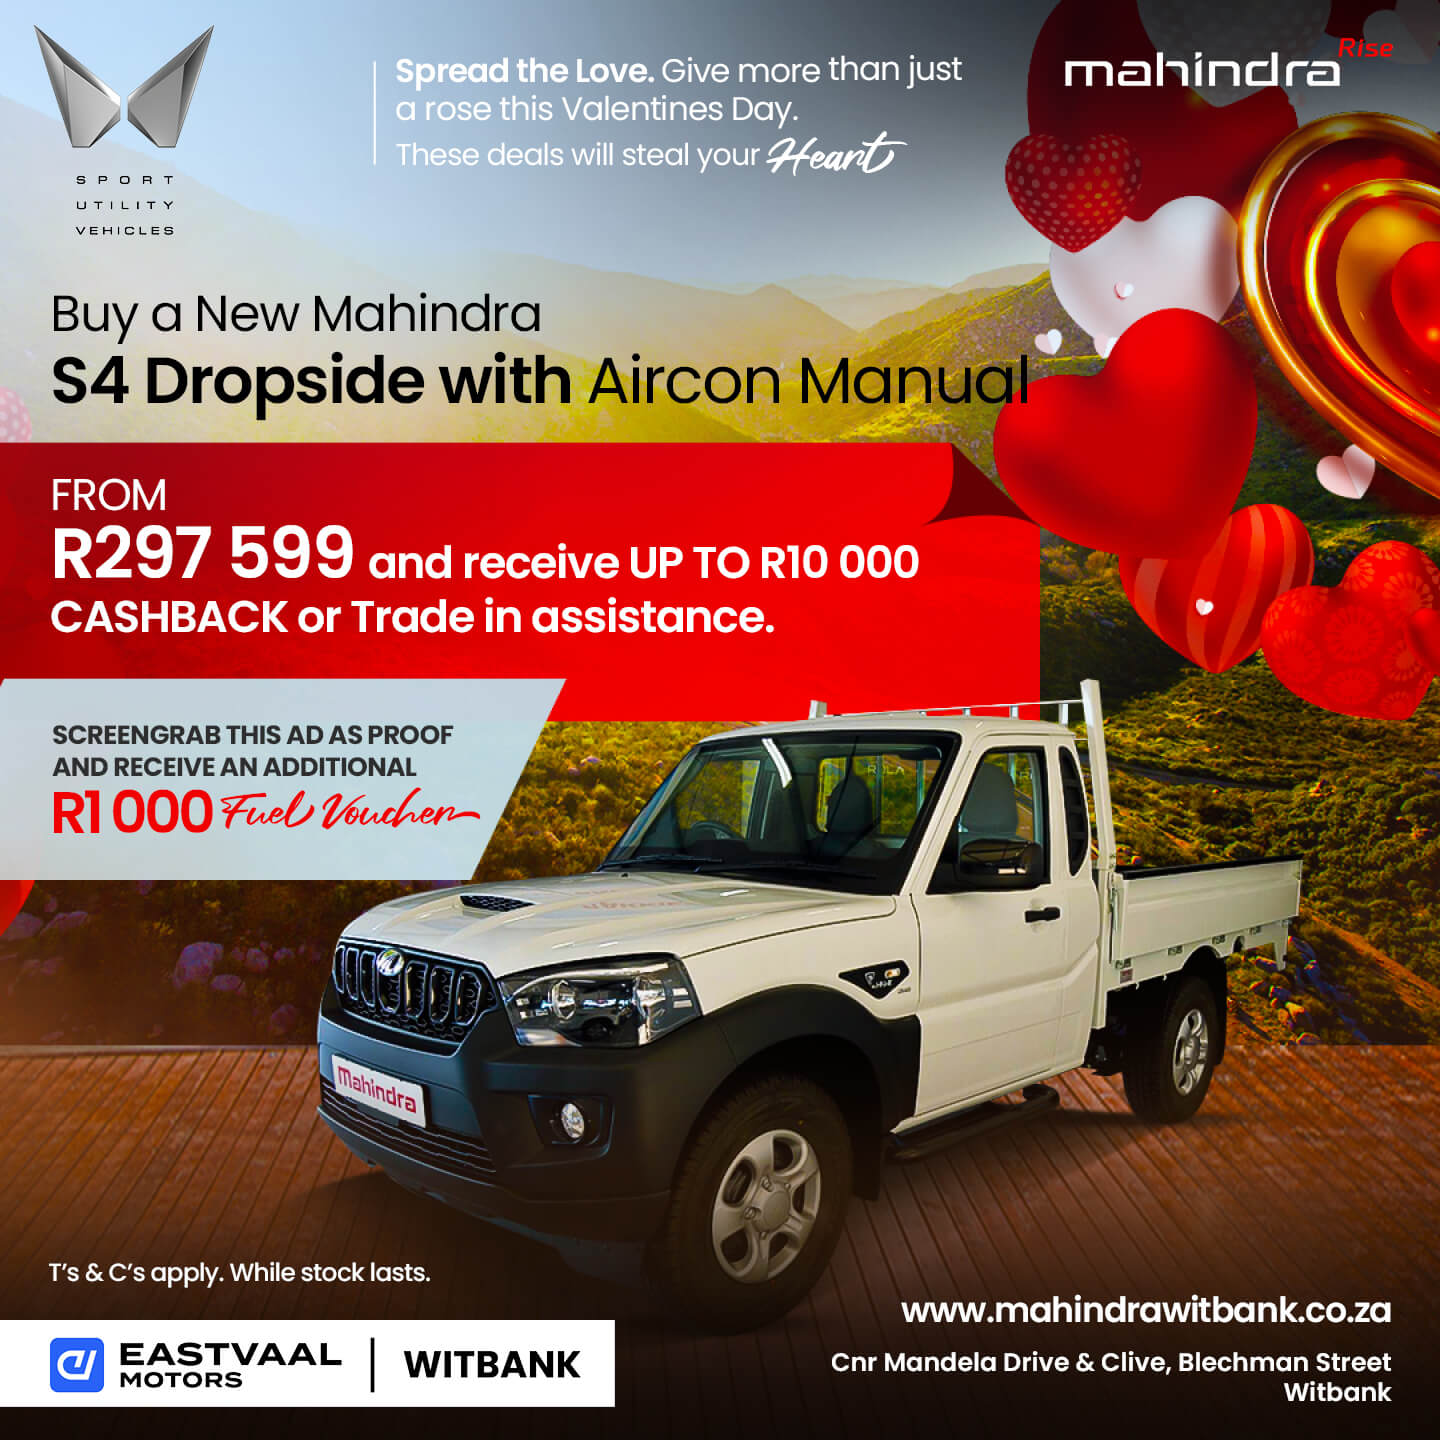 Mahindra S4 Dropside with Aircon Manual image from Eastvaal Motors